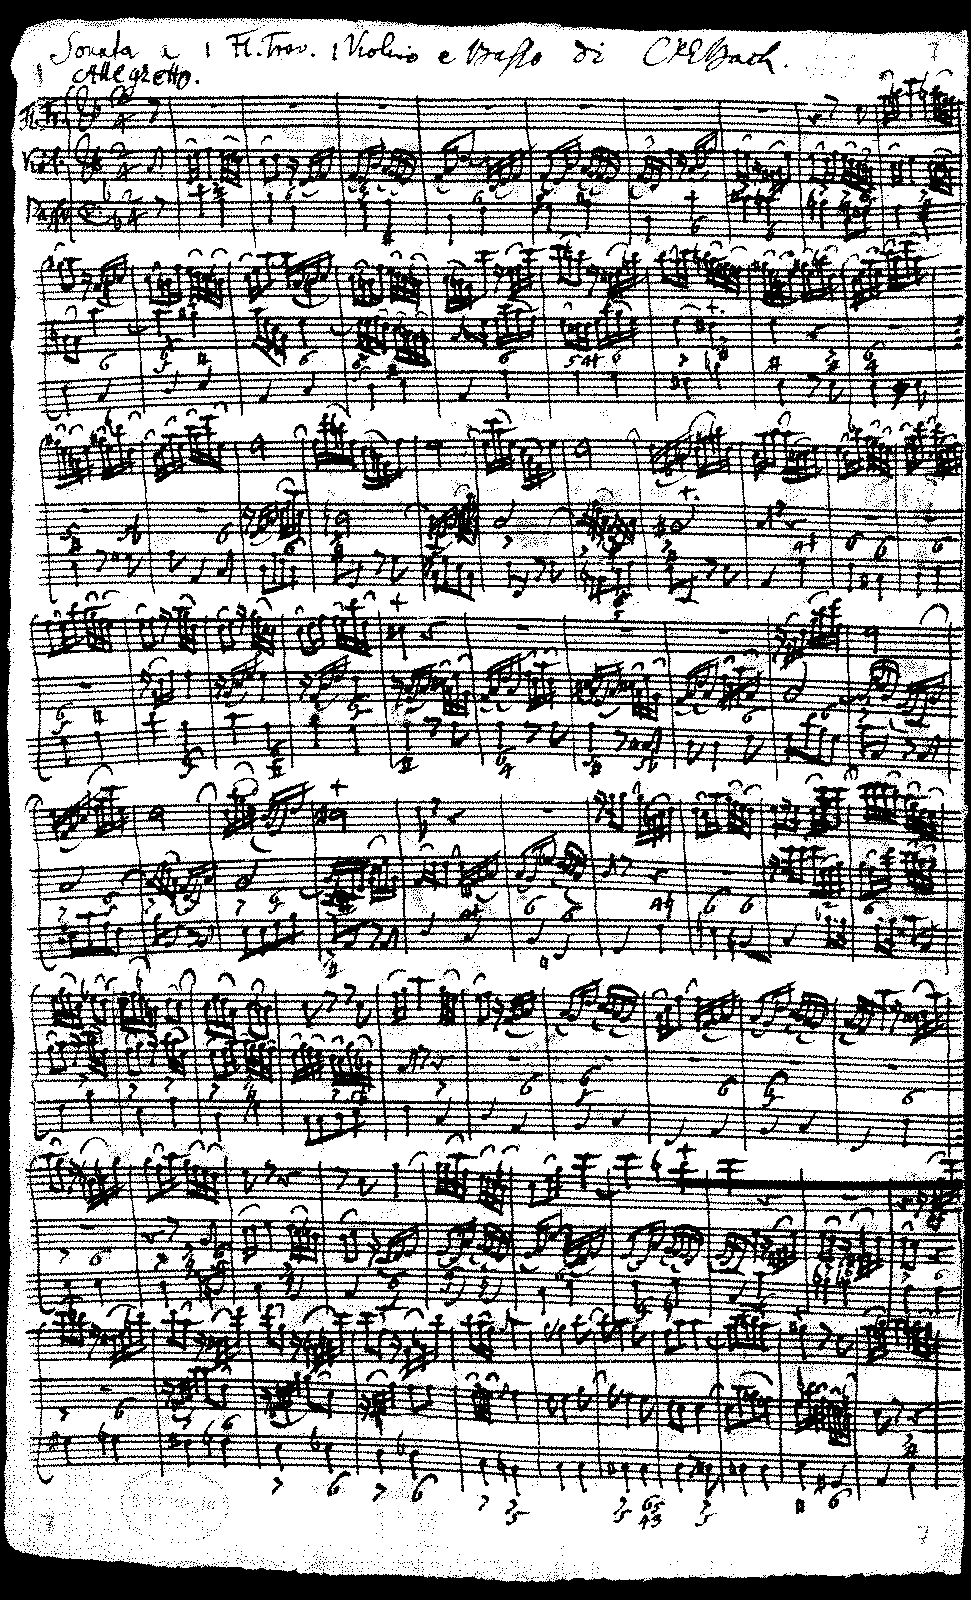 Trio Sonata in D minor, H.569 (Bach, Carl Philipp Emanuel) - IMSLP ...